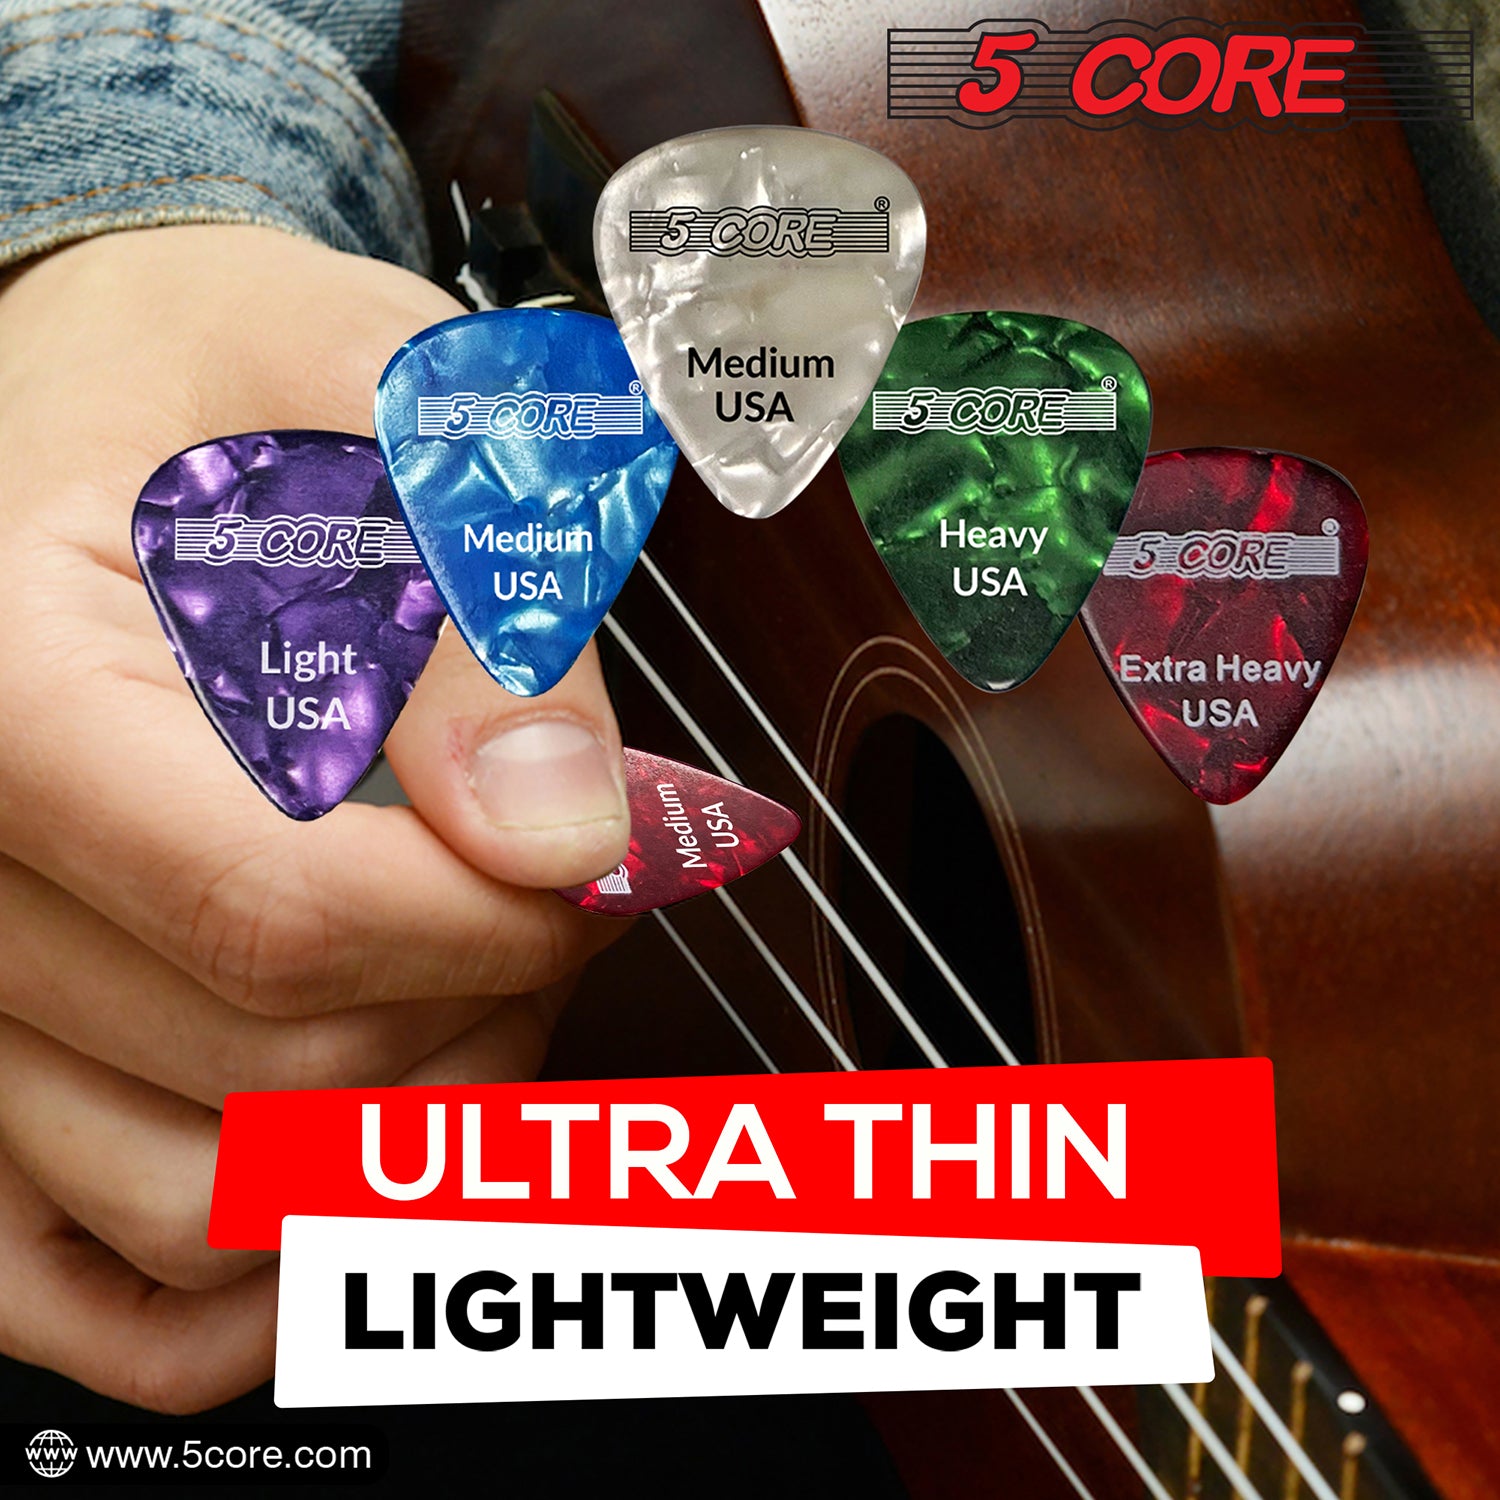 5 Core Celluloid Guitar Picks 48 Pack Purple Light Medium Heavy Extra Heavy Gauge Plectrums for Acoustic Electric Bass Guitar